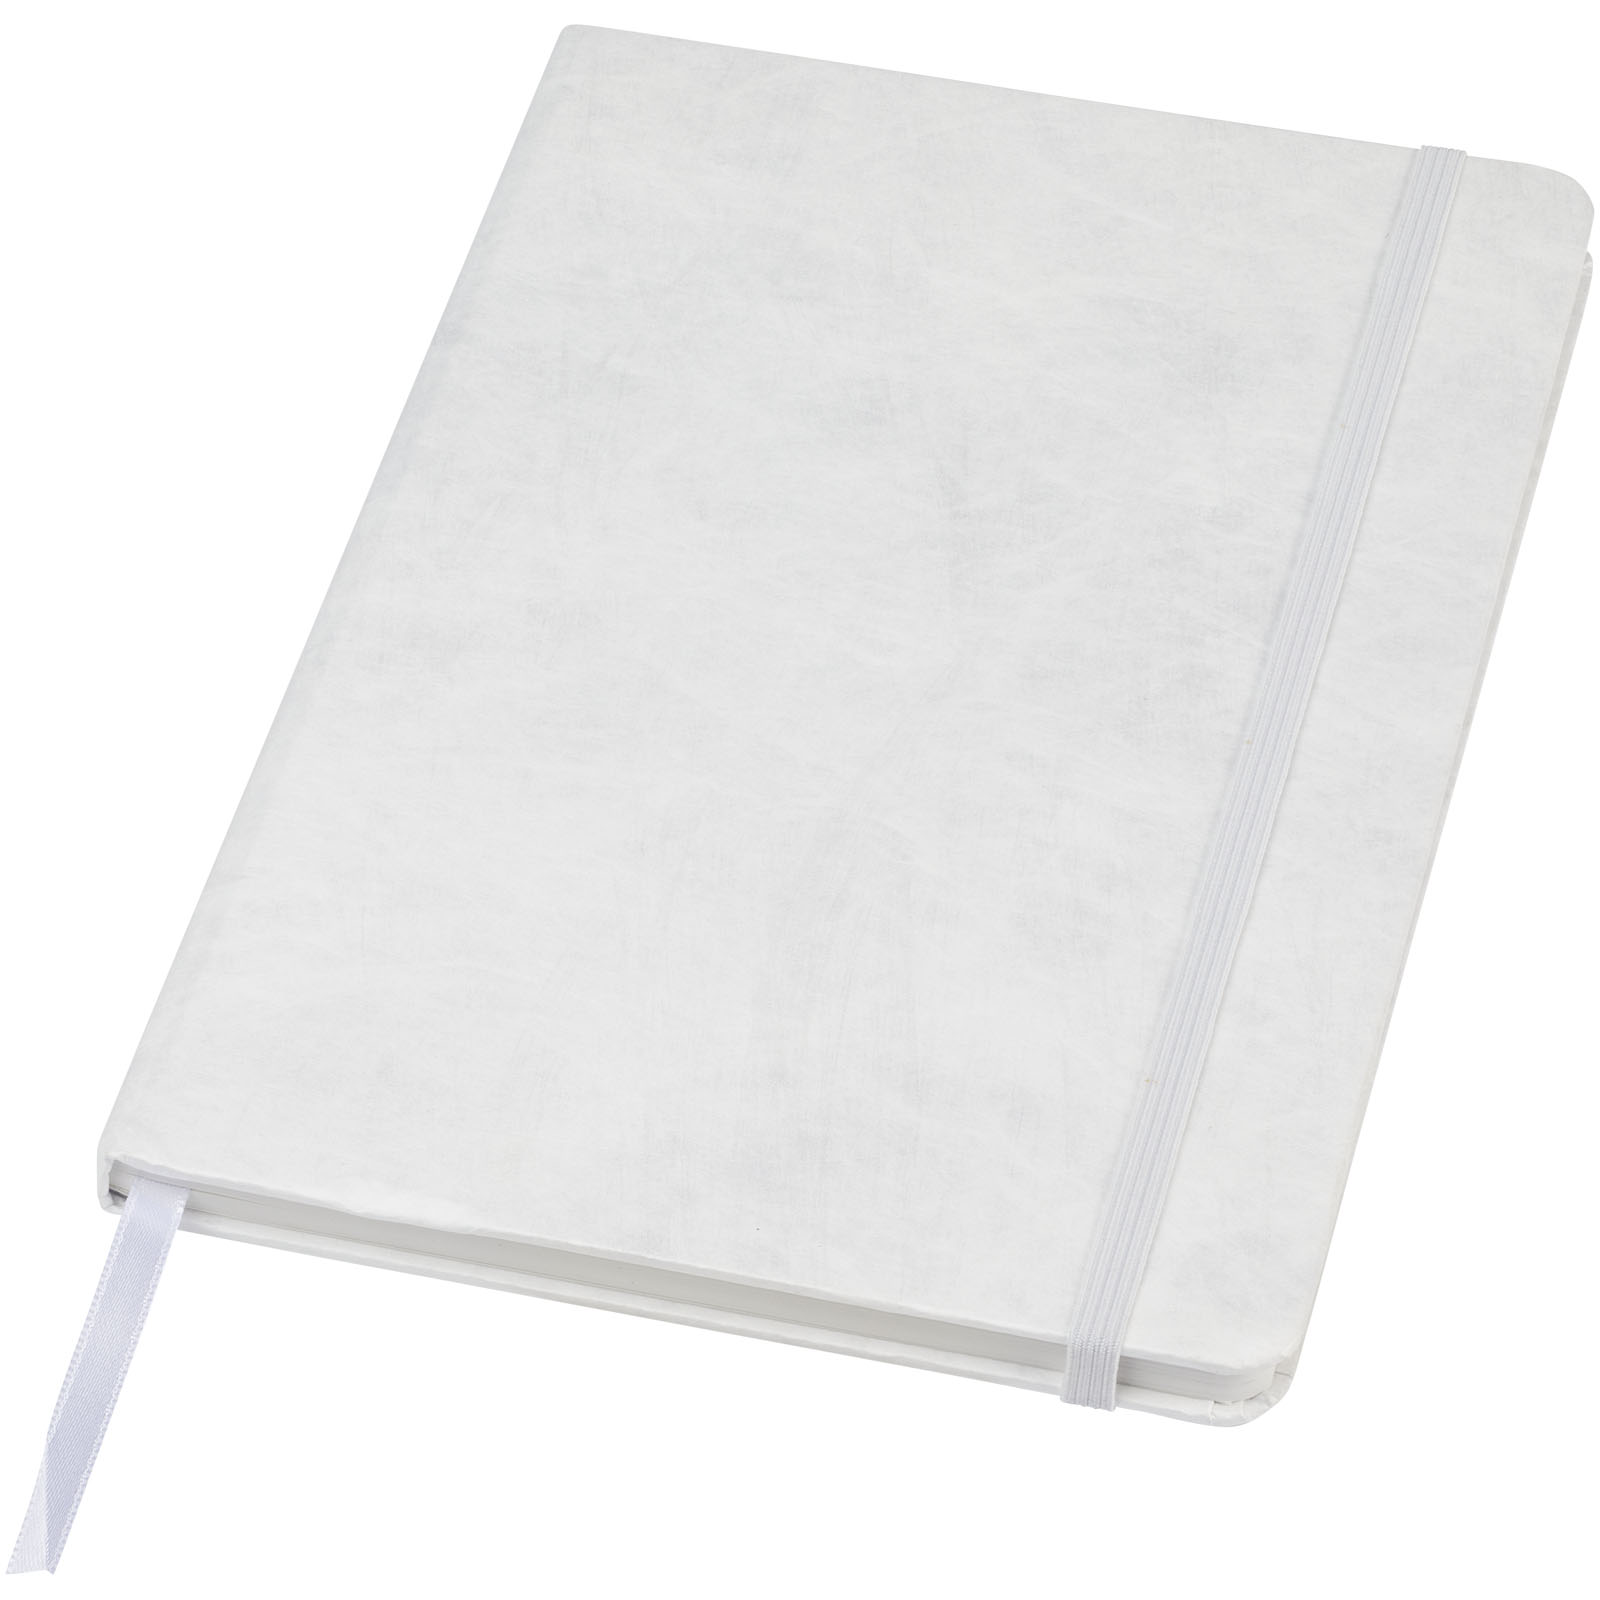 Hard cover notebooks - Breccia A5 stone paper notebook